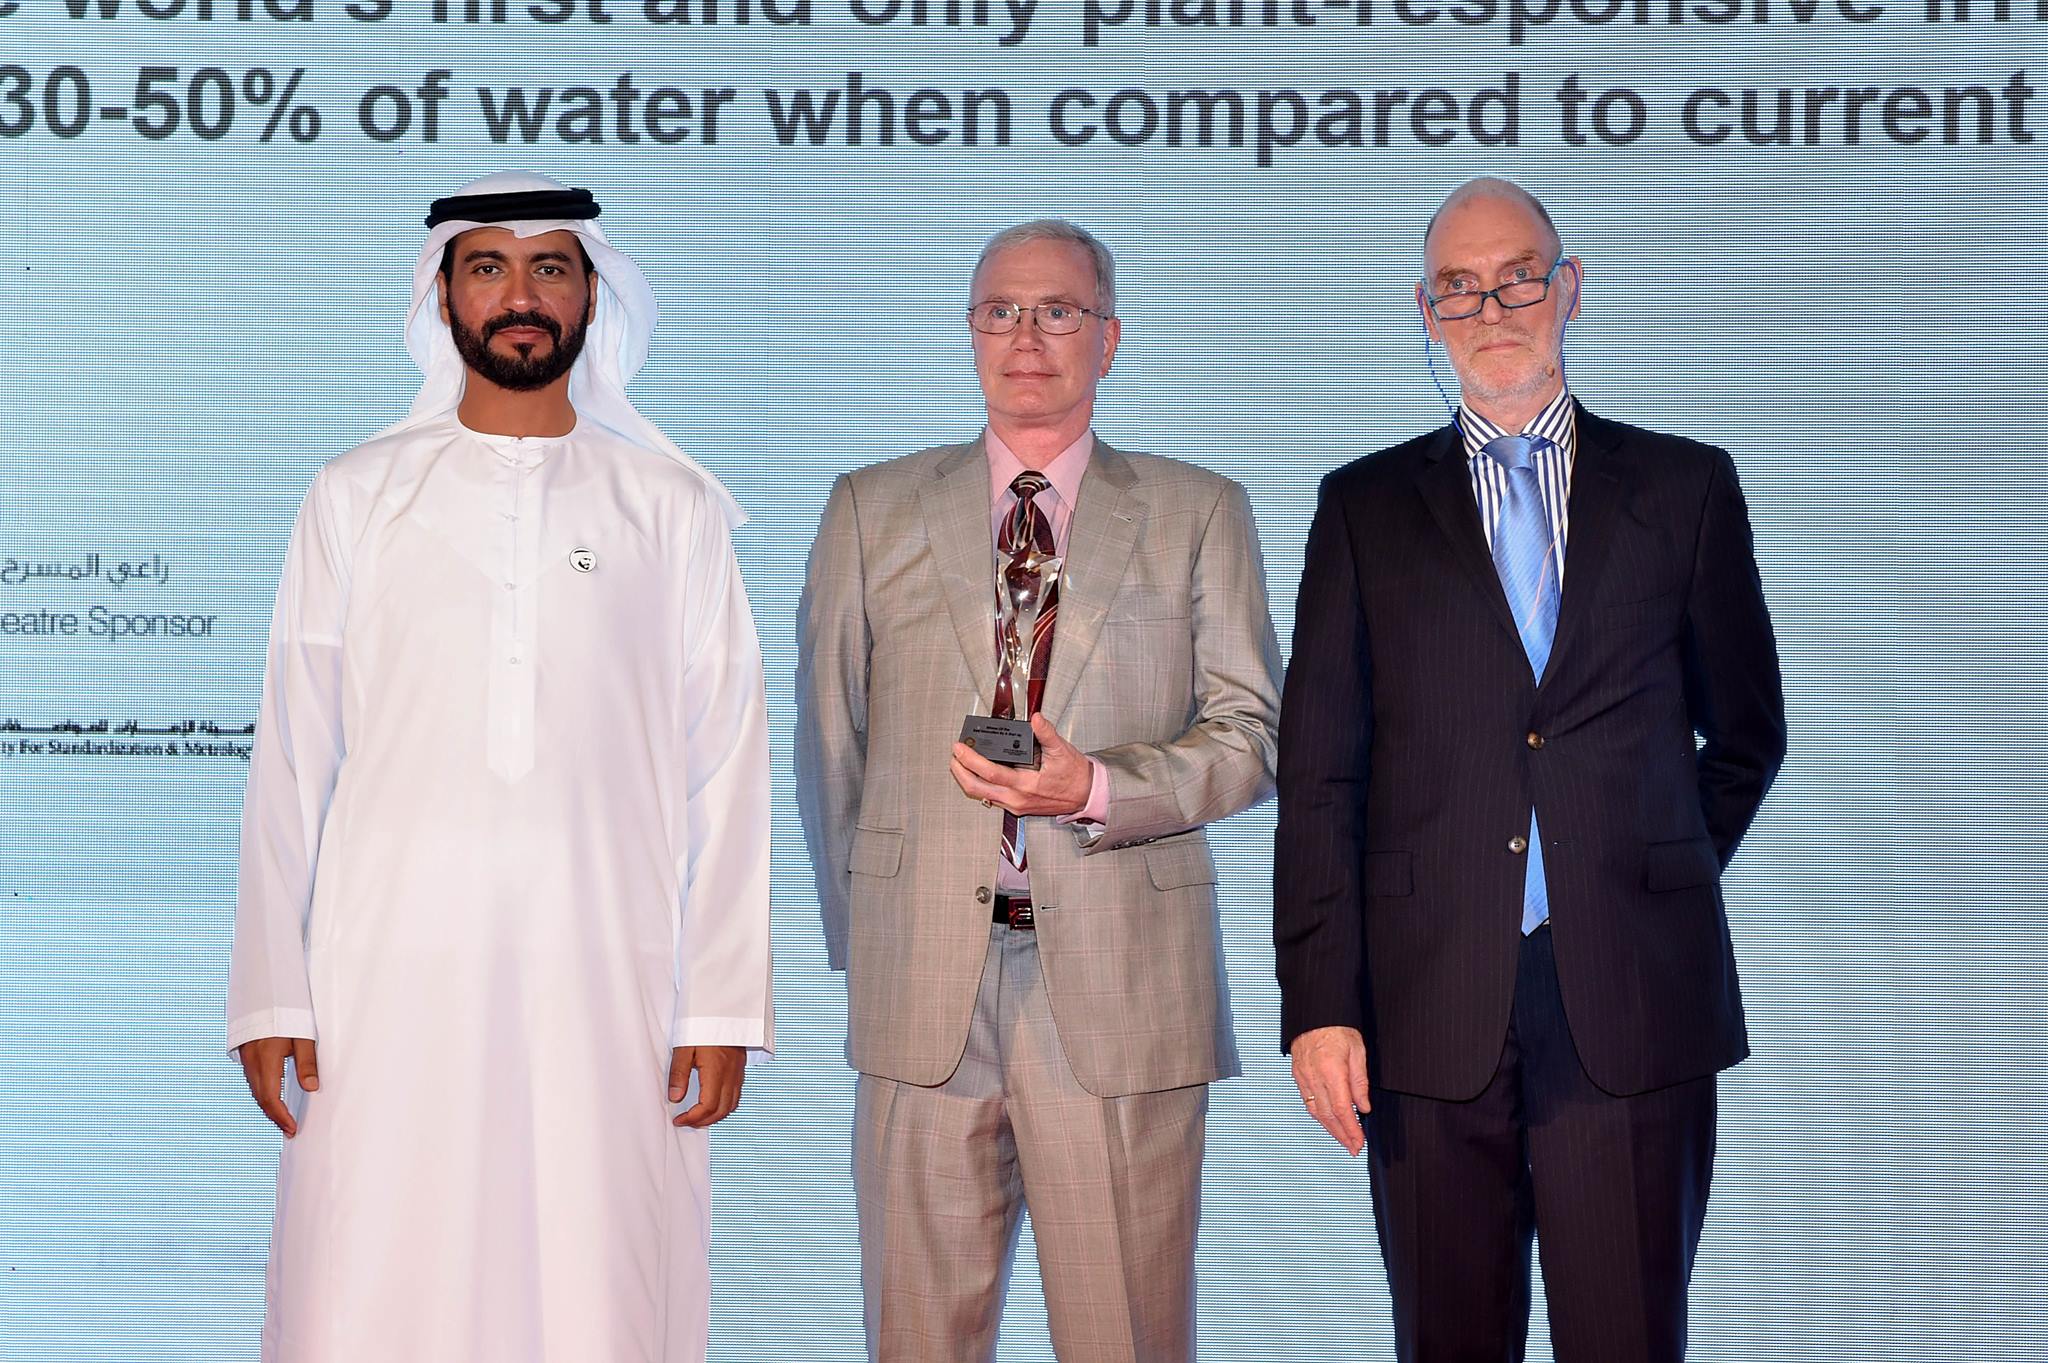 RDI WINS "BEST INNOVATION" AWARD AT THE 2019 GFIA IN ABU DHABI